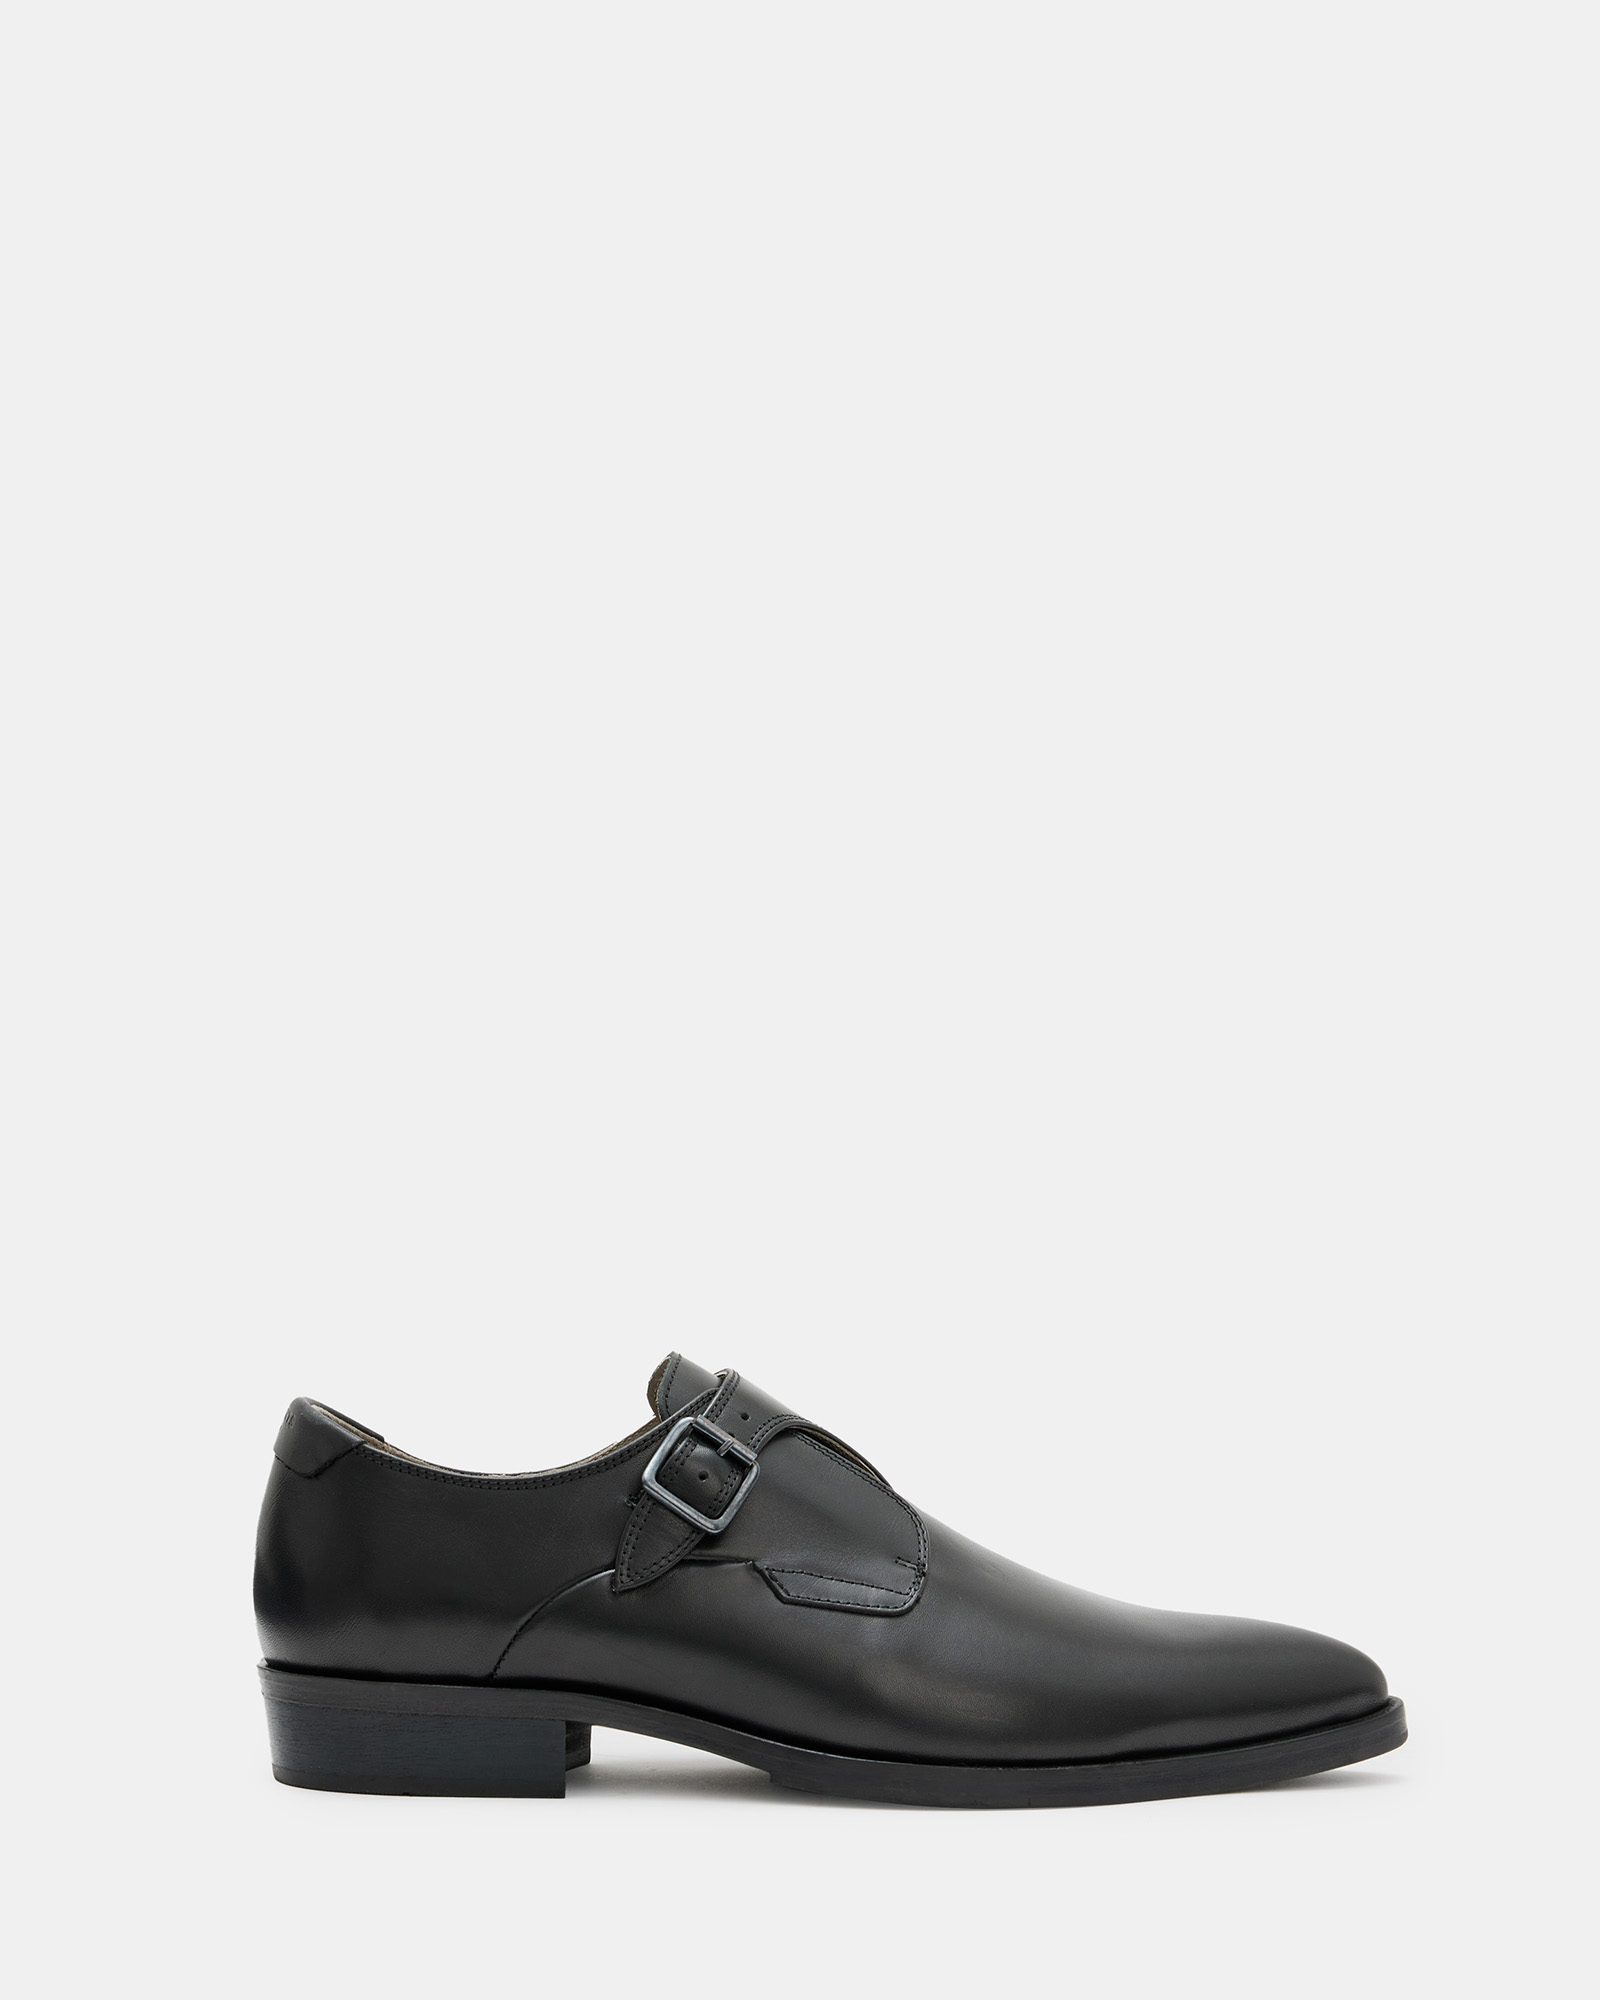 AllSaints Keith Leather Buckle Monk Shoes,, Black